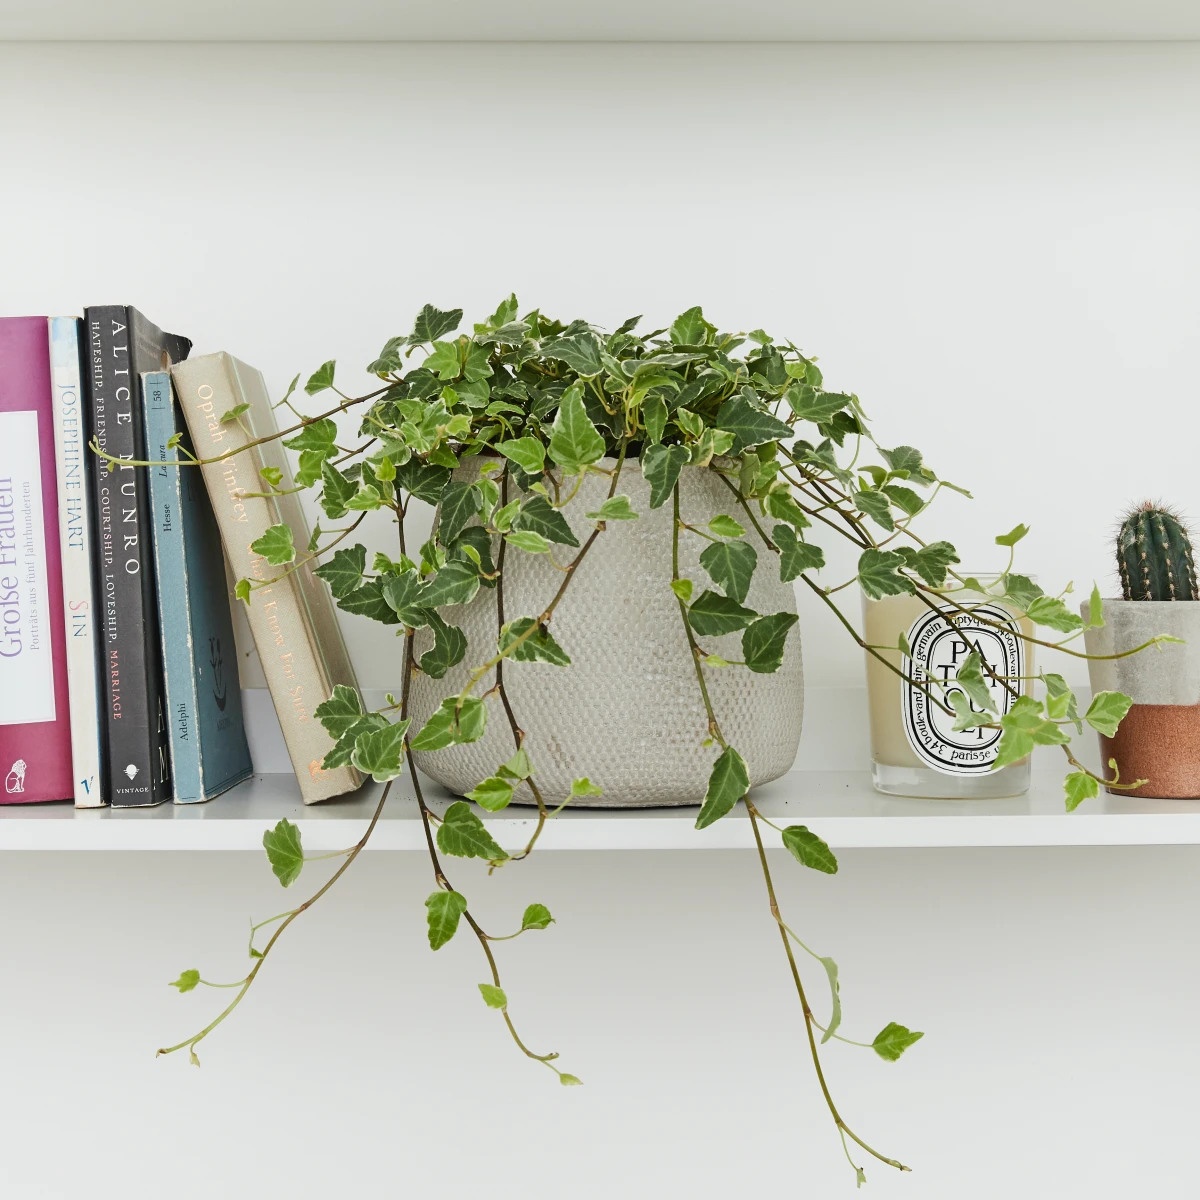 humidity absorbing houseplants english ivy trailing from bookshelf